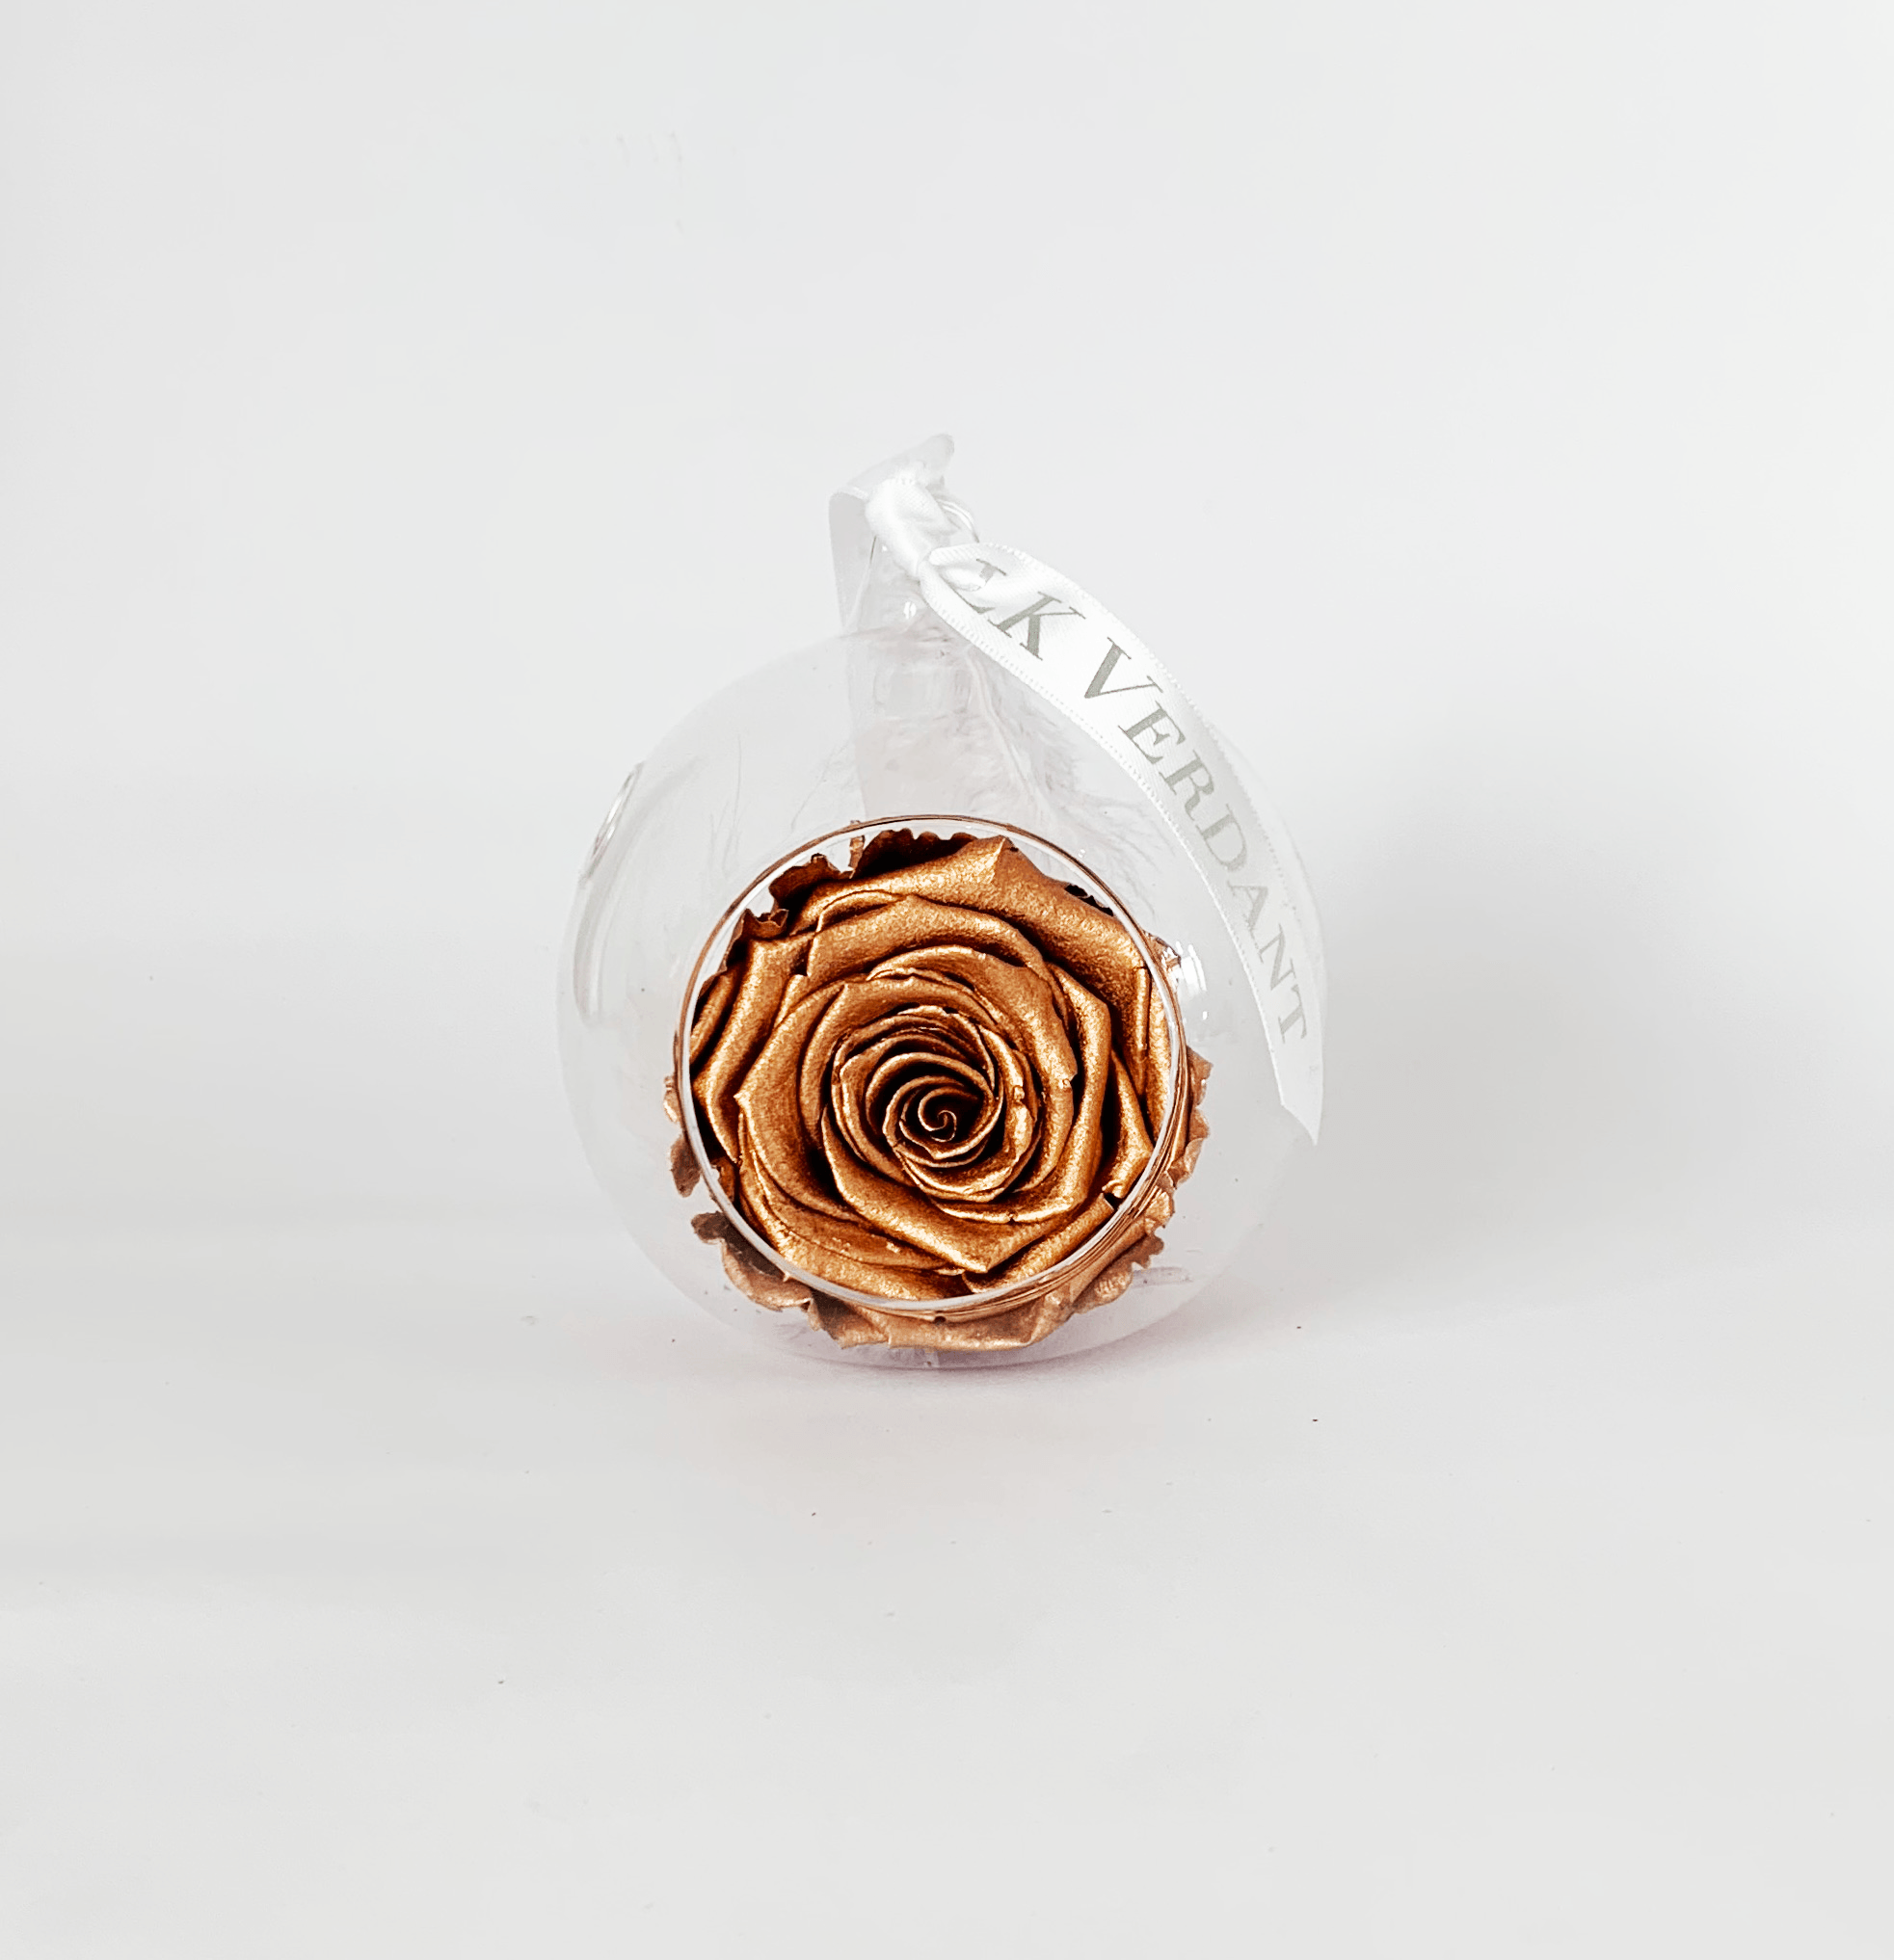 The Always Copper Forever Rose - Shop for Flowers and Forever Roses - LK VERDANT